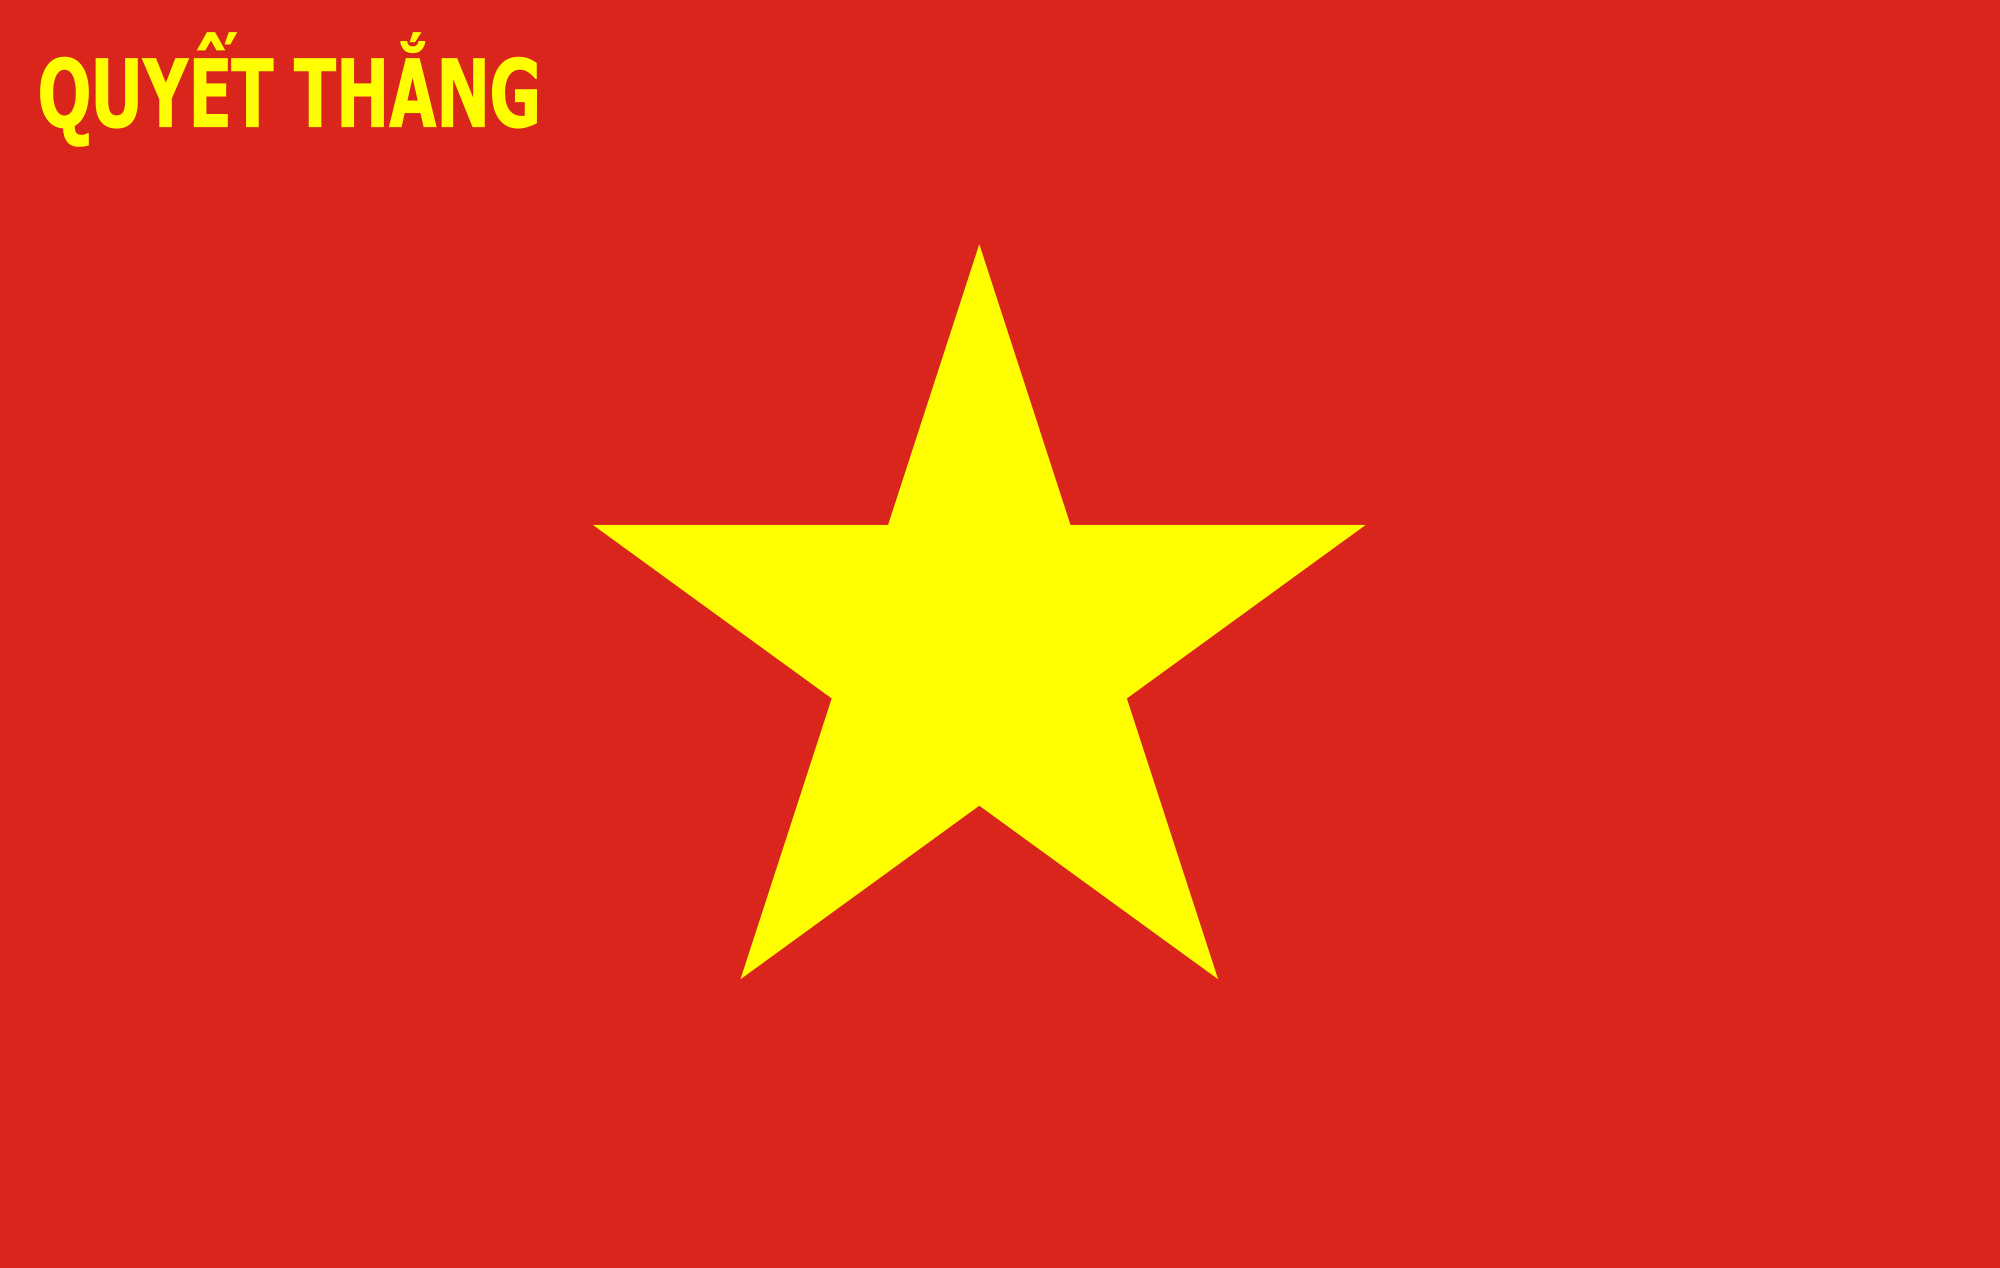 Vietnam (People’s Army)